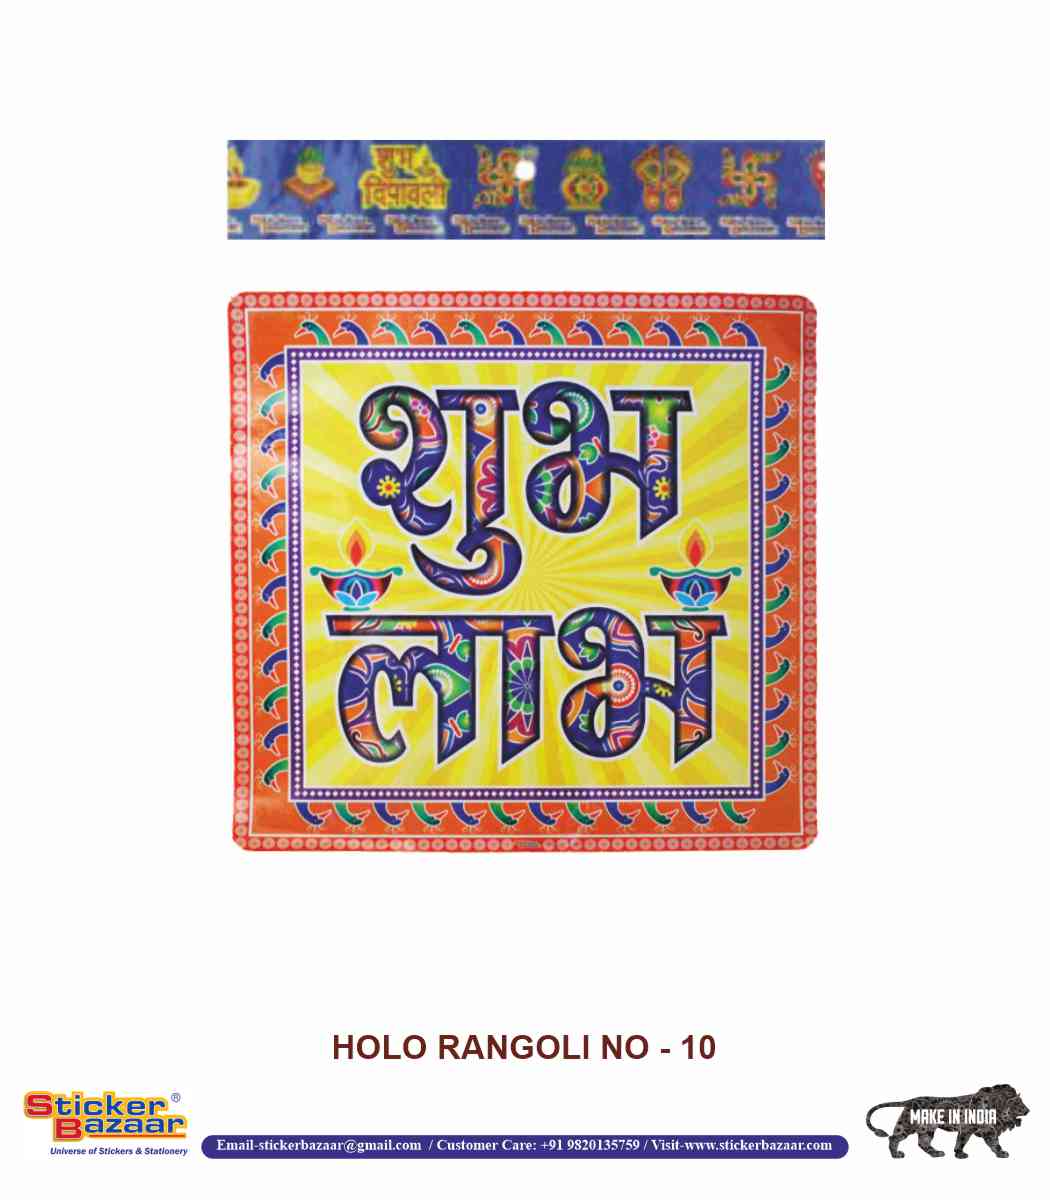 Sticker Bazaar Holo Rangoli HR10 with Header